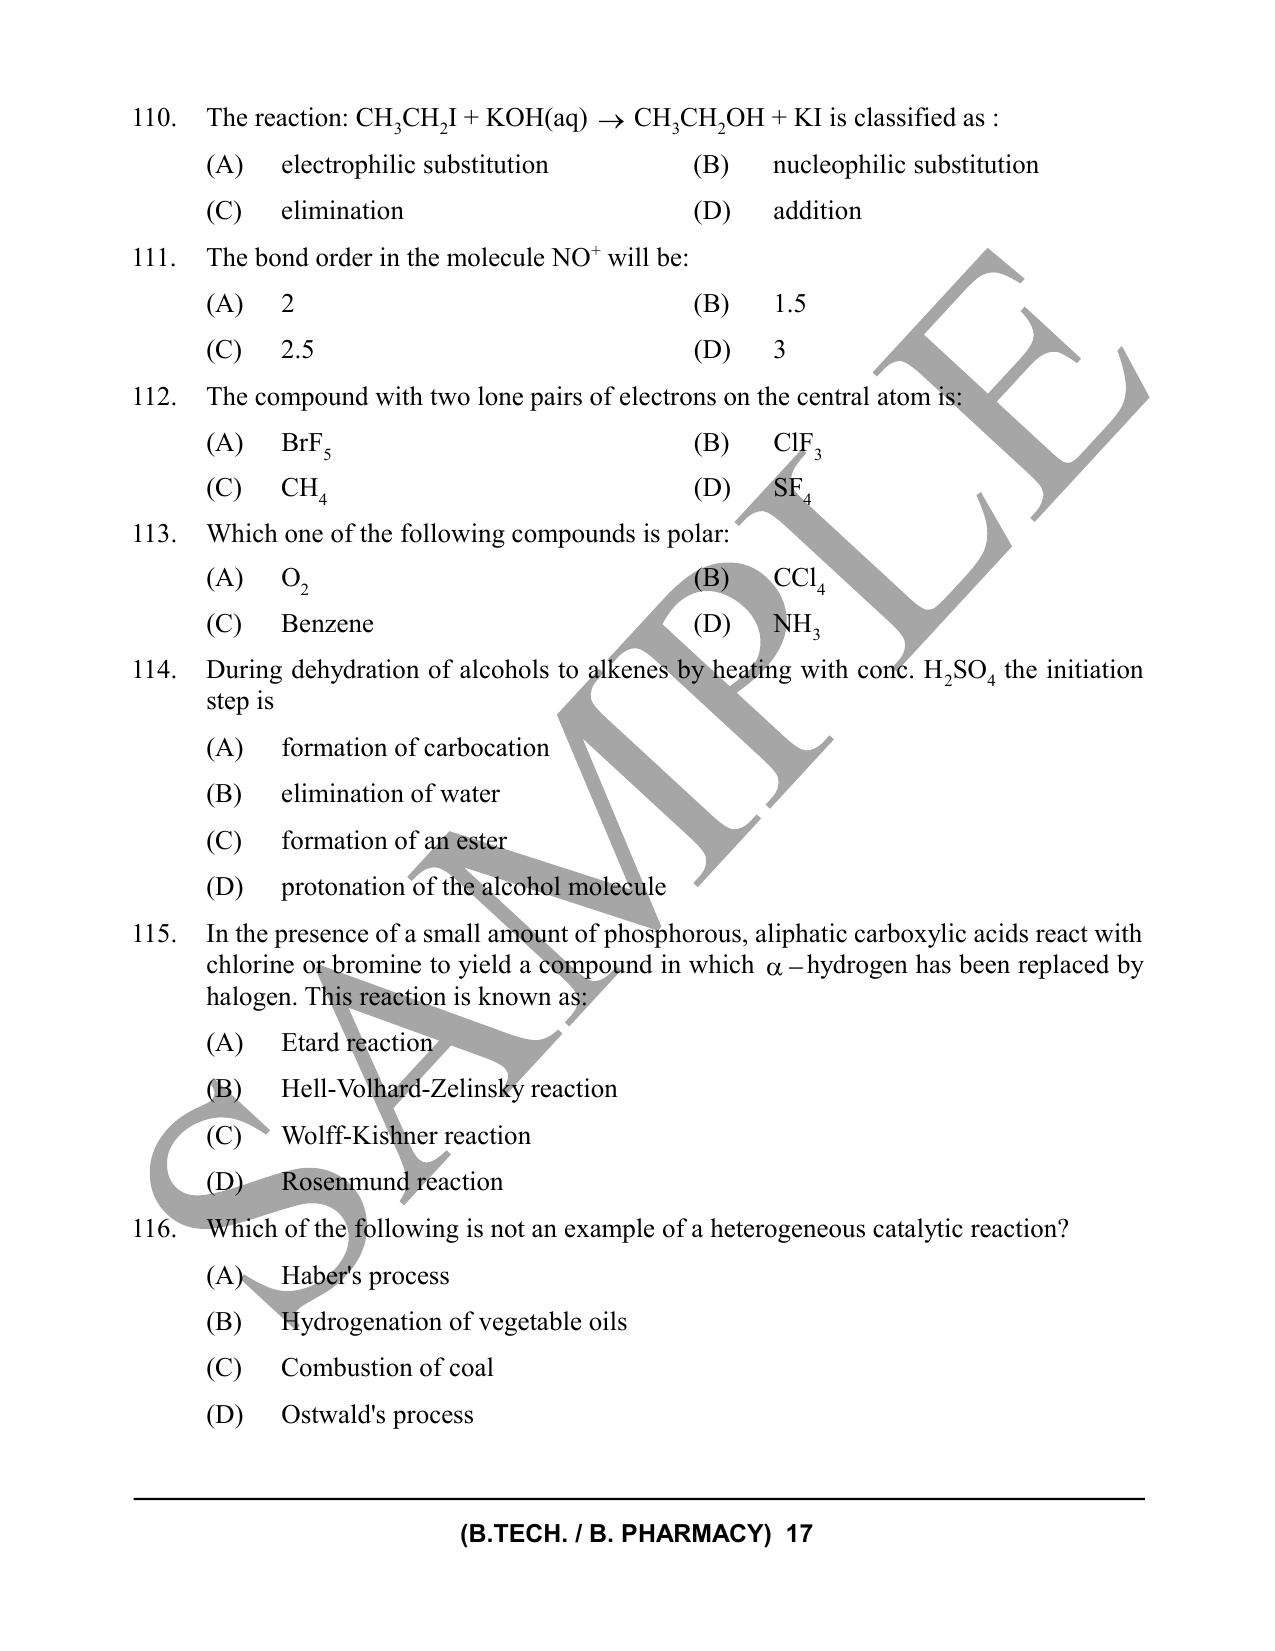 HPCET B. Tech. and B. Pharm. 2023 Sample Paper - Page 17